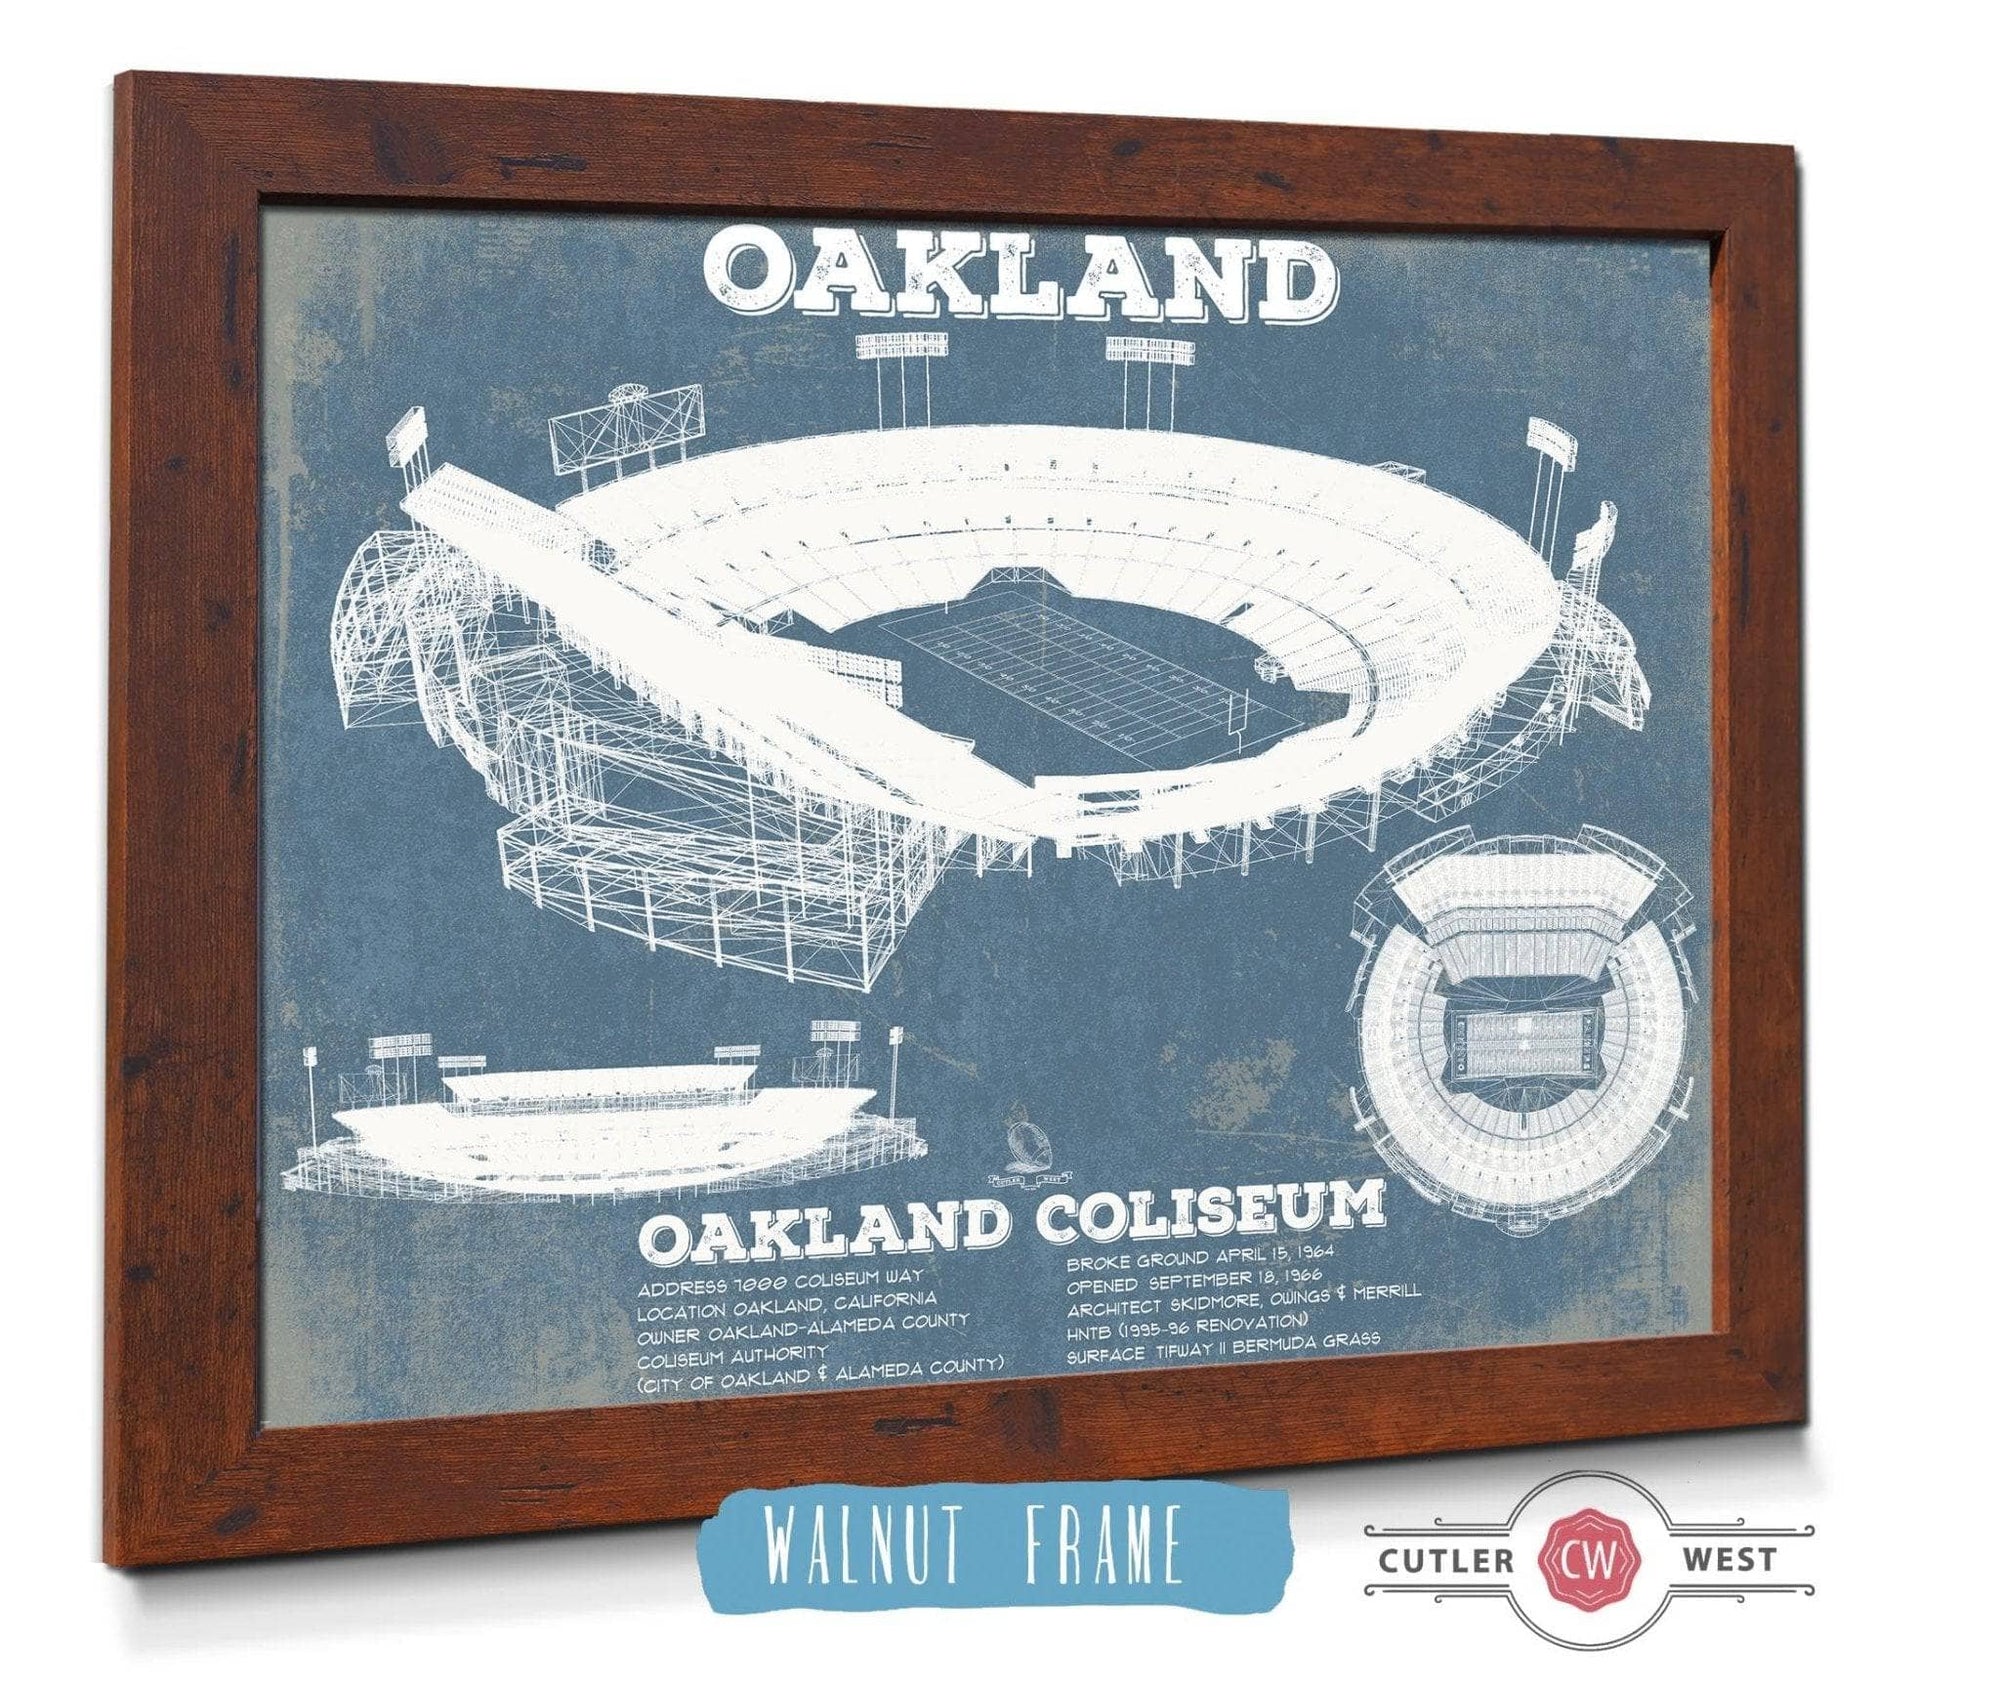 Cutler West Pro Football Collection 14" x 11" / Walnut Frame Oakland Raiders Oakland Coliseum NFL Vintage Football Print 933311317_70562